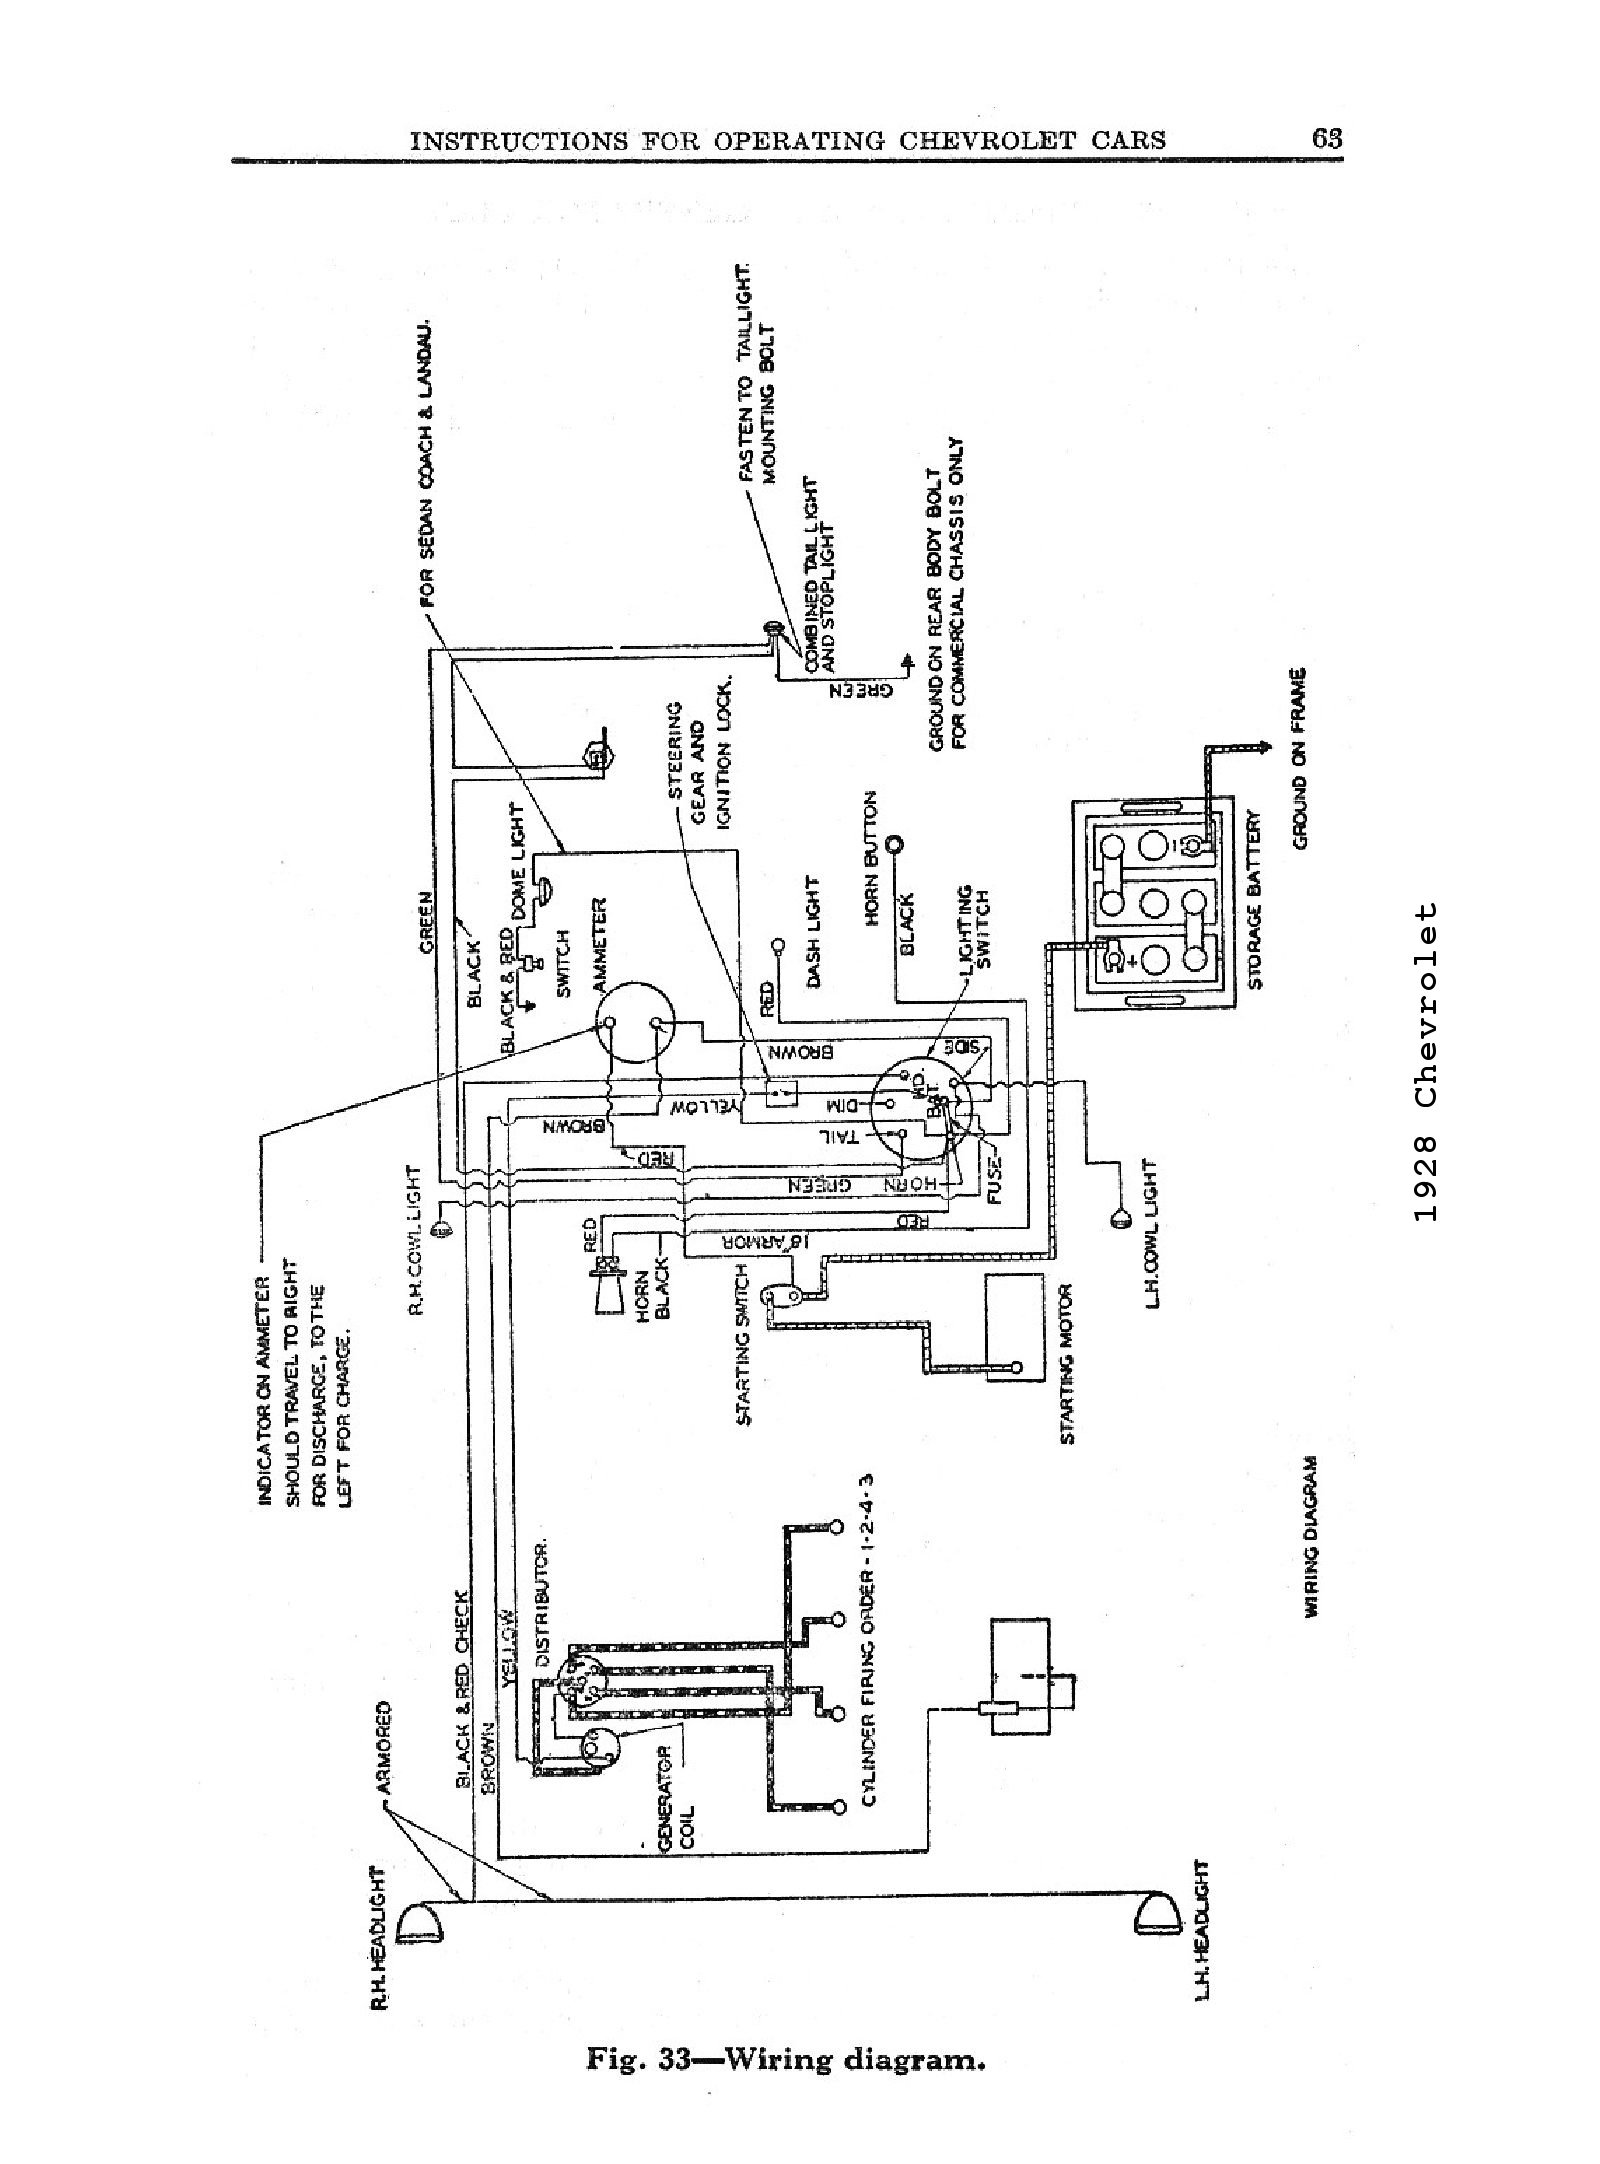 Chevy Wiring diagrams 1957 chevrolet fuse box diagram 